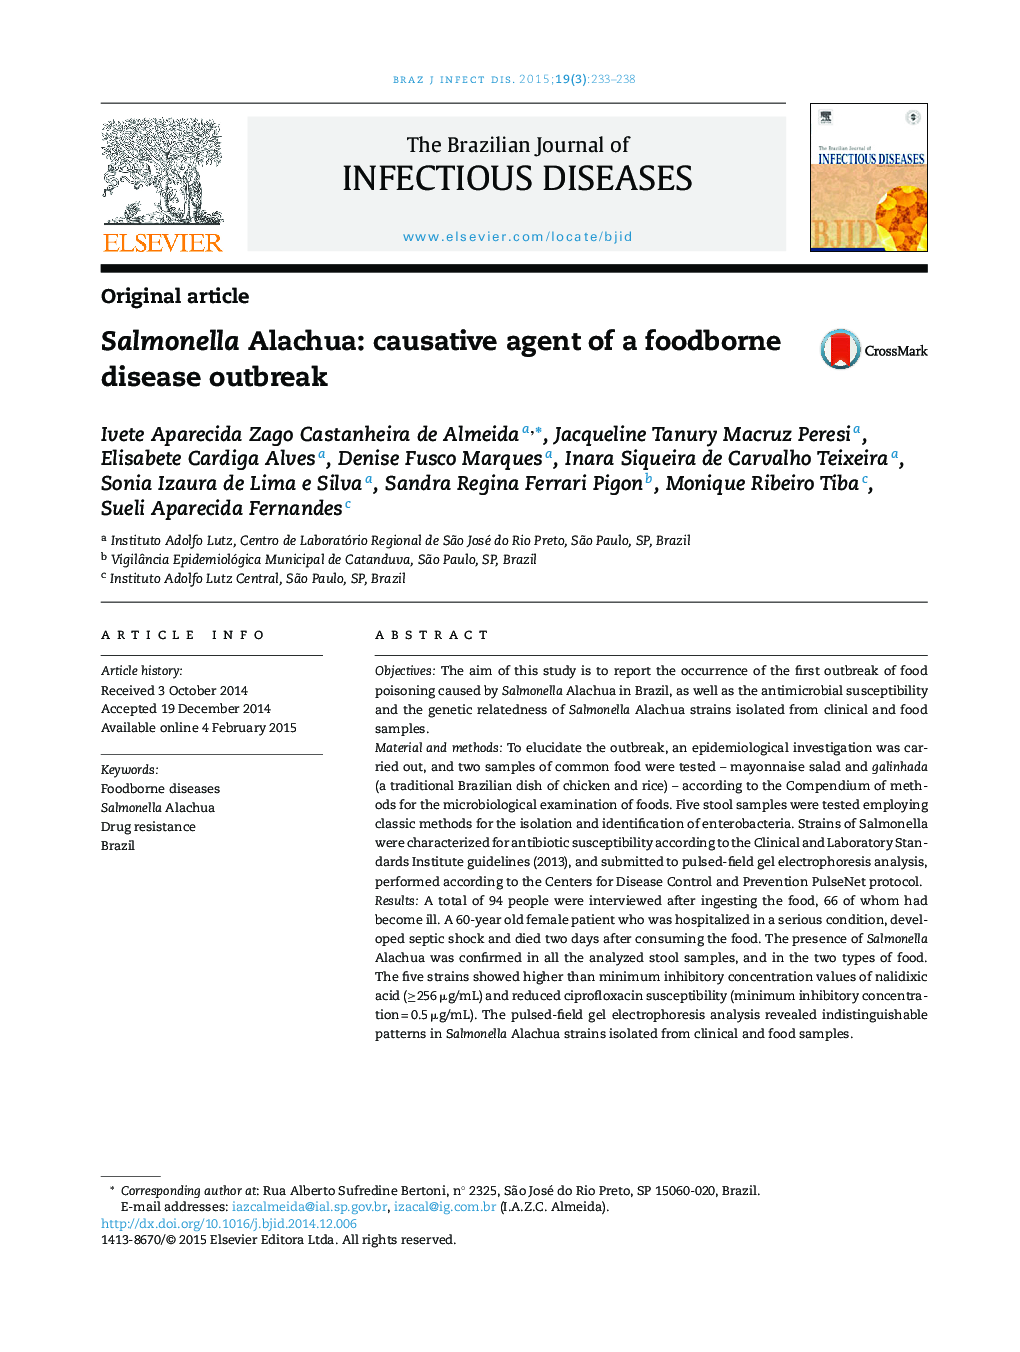 Salmonella Alachua: causative agent of a foodborne disease outbreak